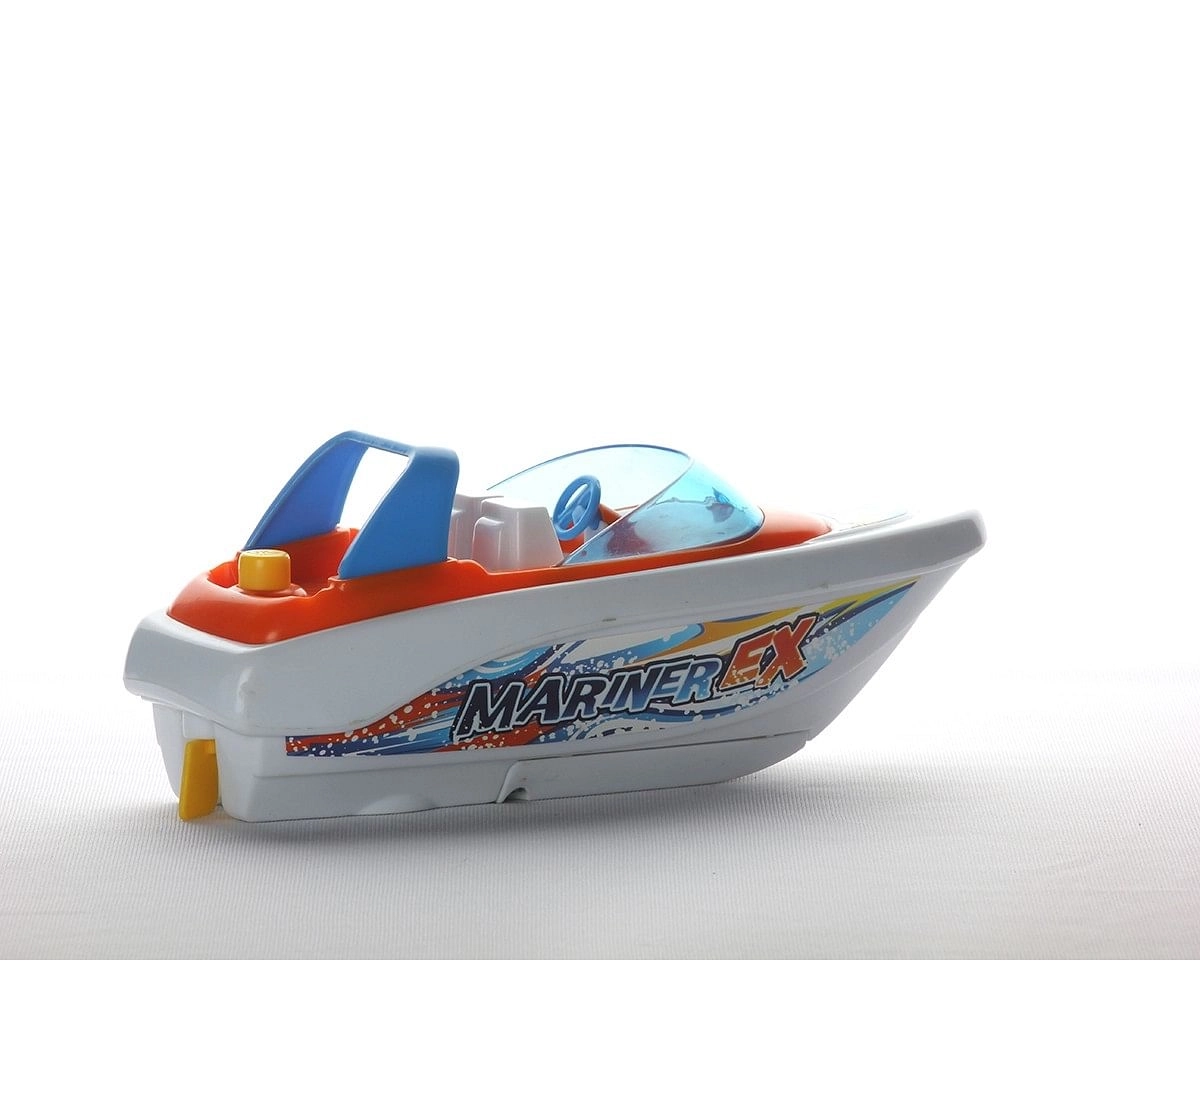  Hamleys Speed Boat Bath Toy Bath Toys & Accessories for Kids age 2Y+ 